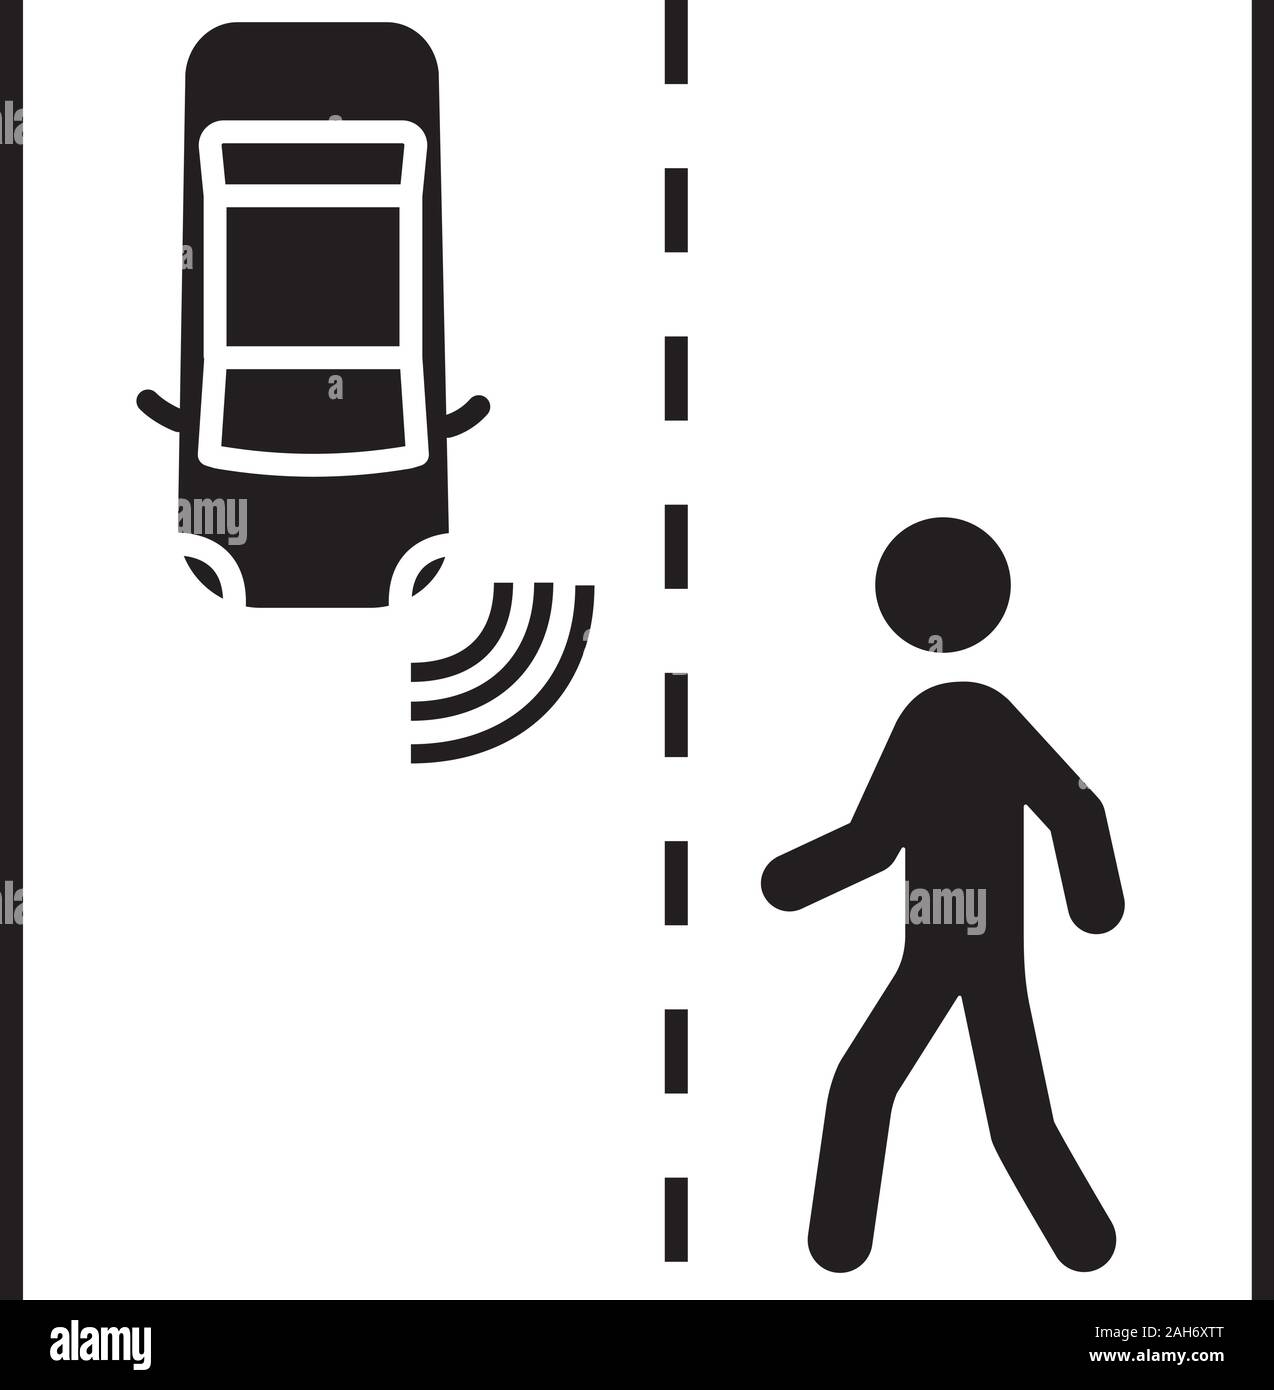 Autonome Auto erkennen Fußgänger glyph Icon. Fahrerlose Auto auf der Straße. Selbstfahrer auto Tracking Objekte Position mit Videokamera. Sil Stock Vektor